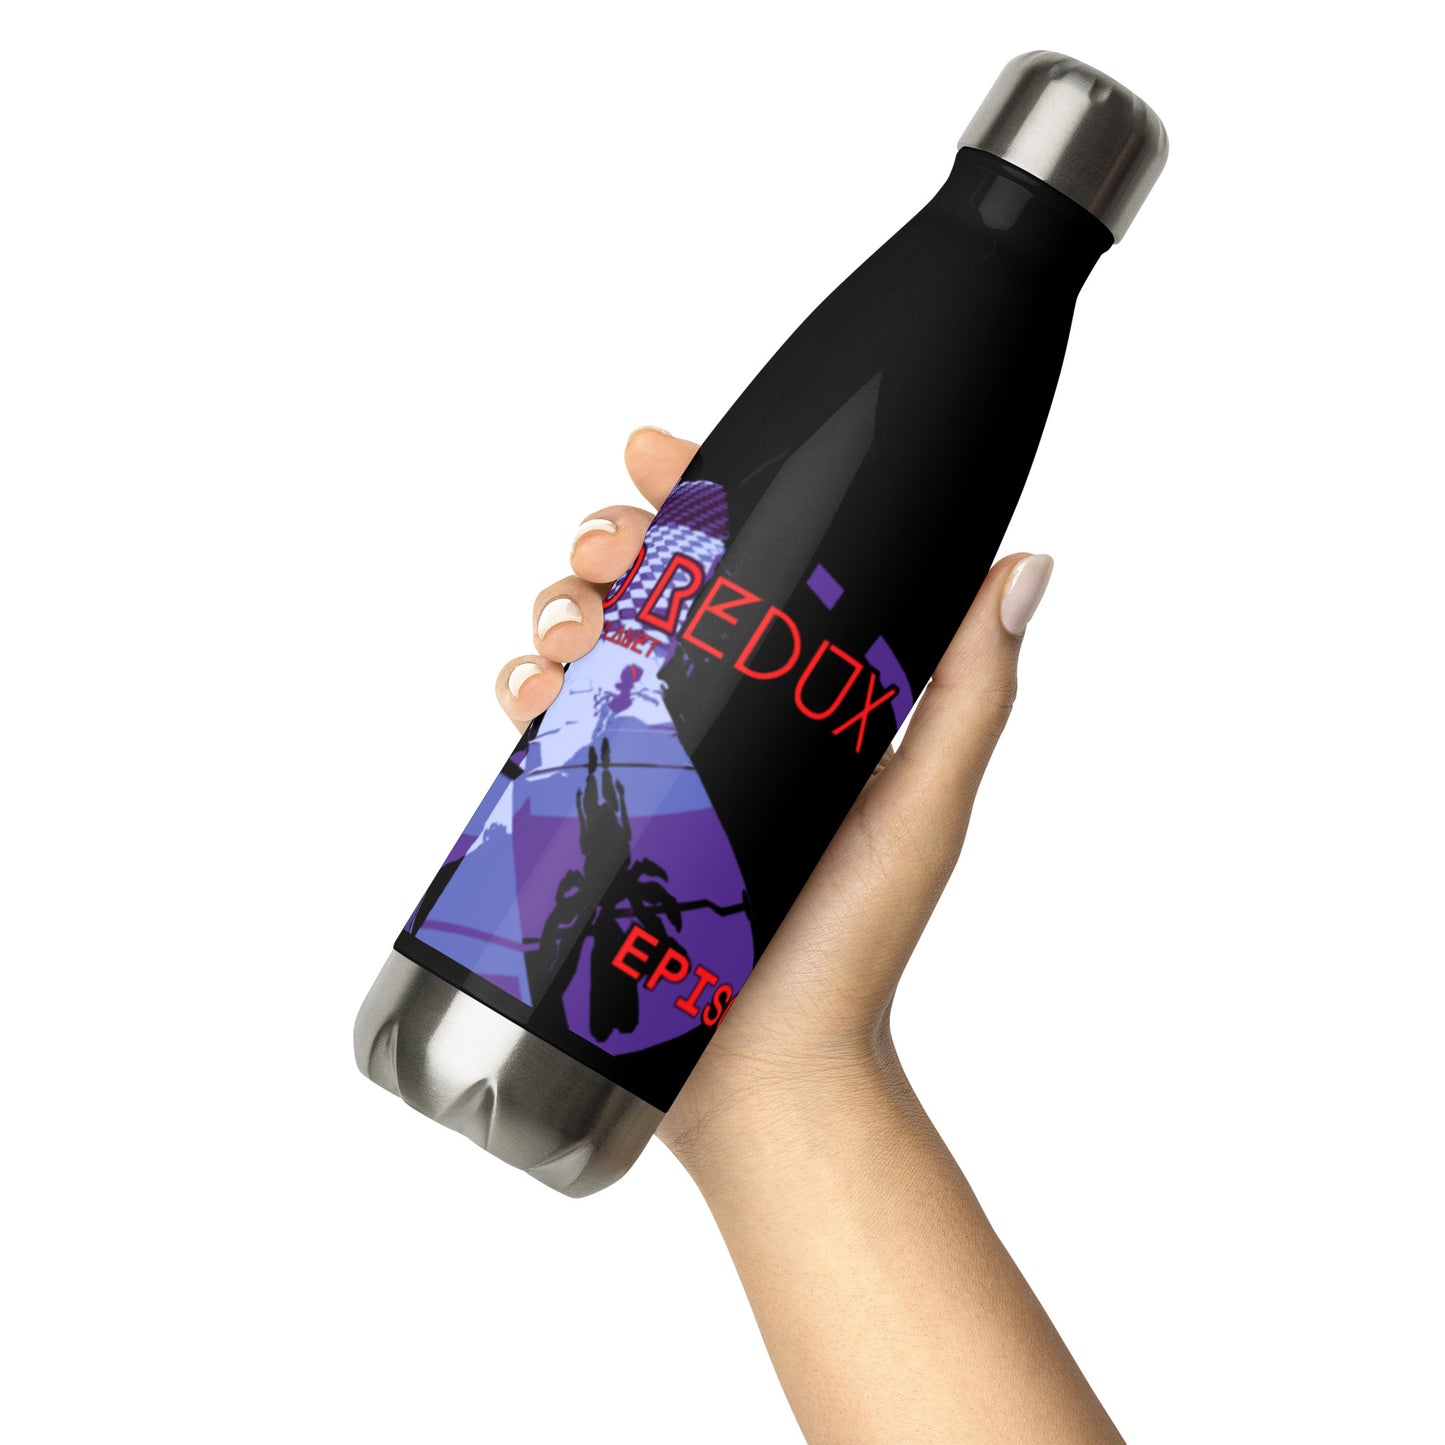 Yoko_Redux_2_Stainless steel water bottle